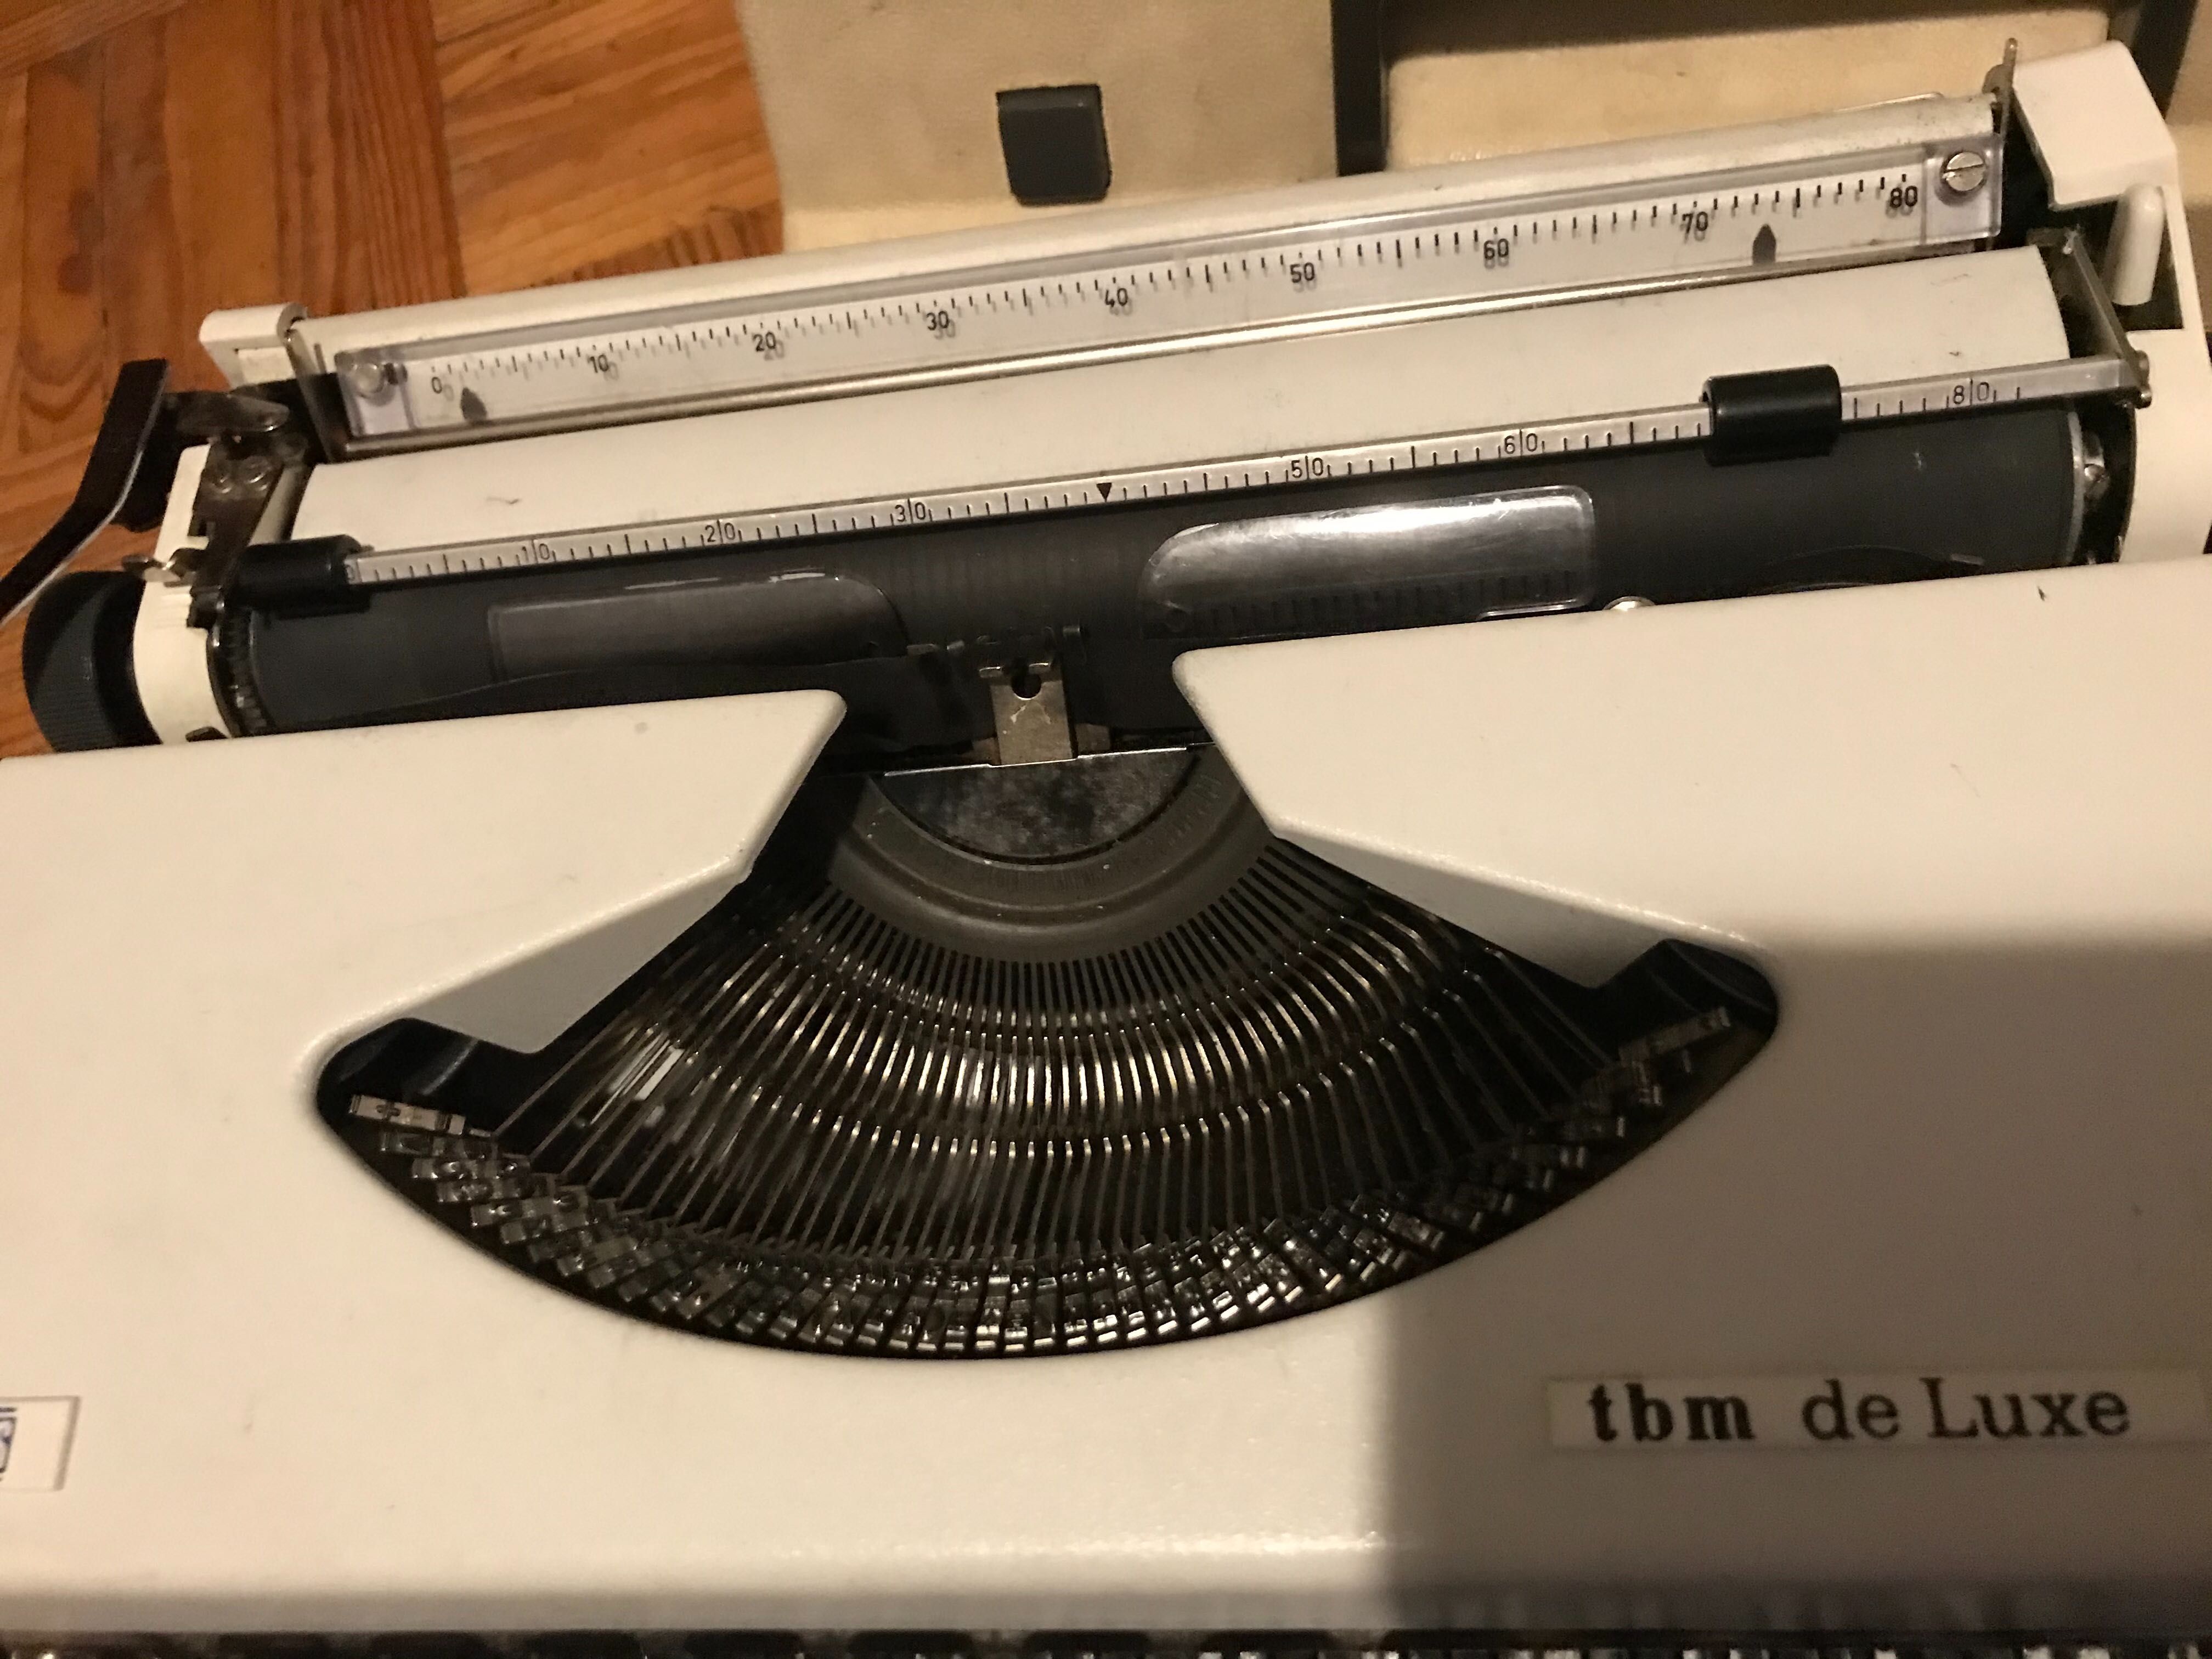 Maquina de escrever vintage/antiga Unis tbm de lux